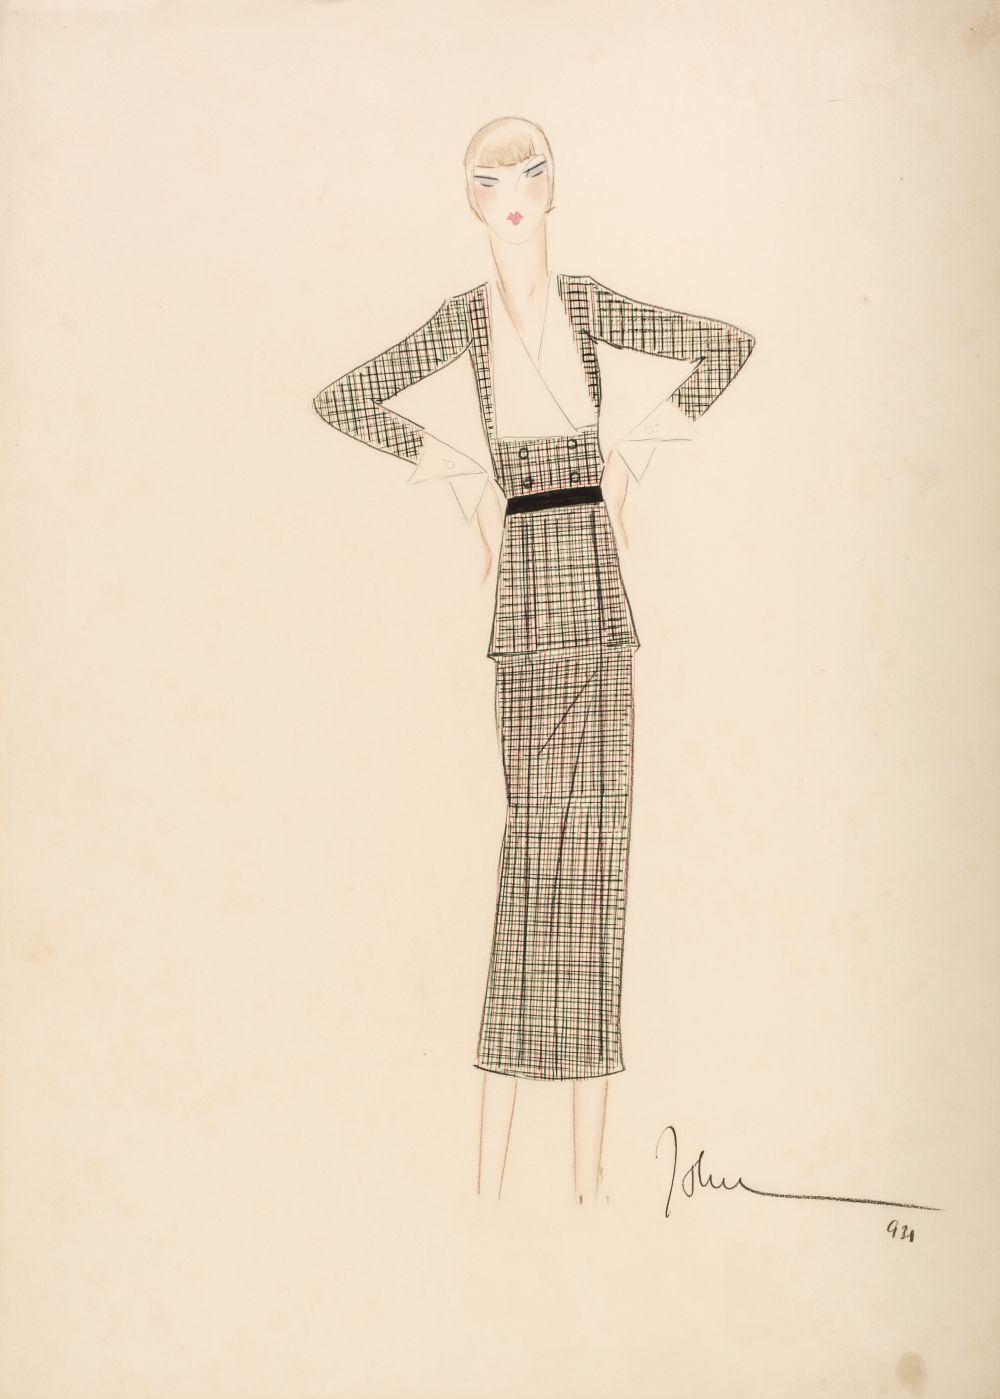 * Guida (John, 1896-1965). Fashion design for a plaid two-piece, circa 1930